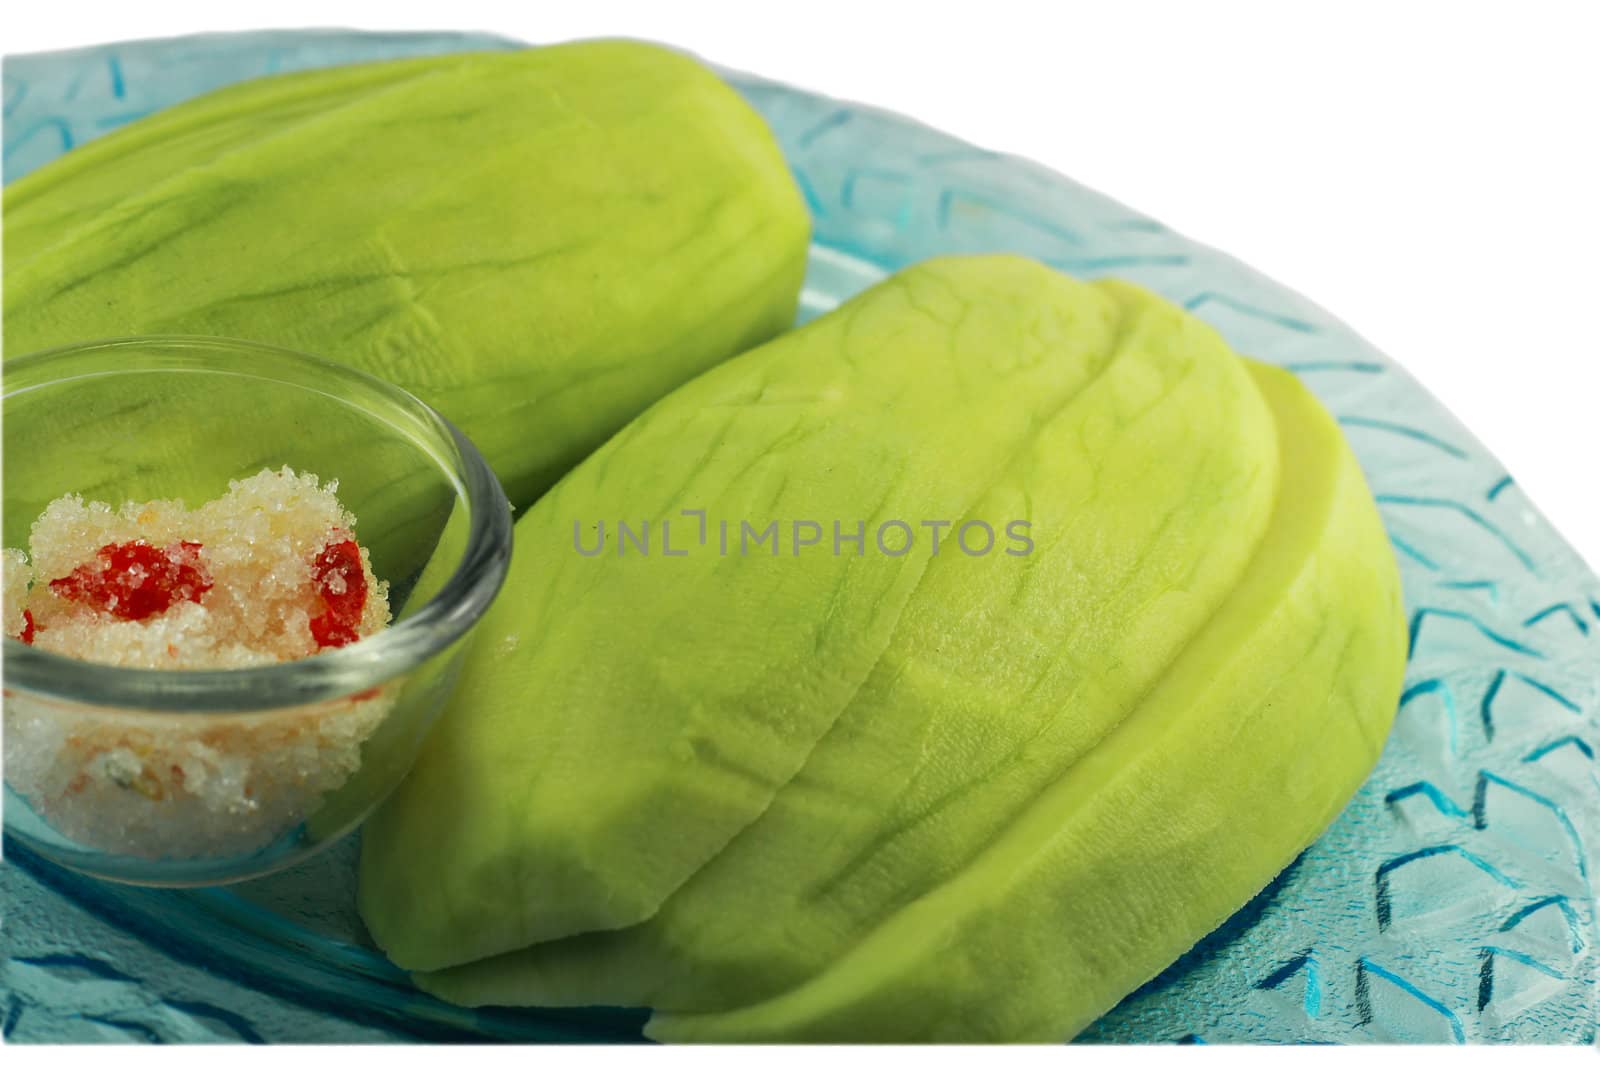 Sliced green mango on a white background by bajita111122